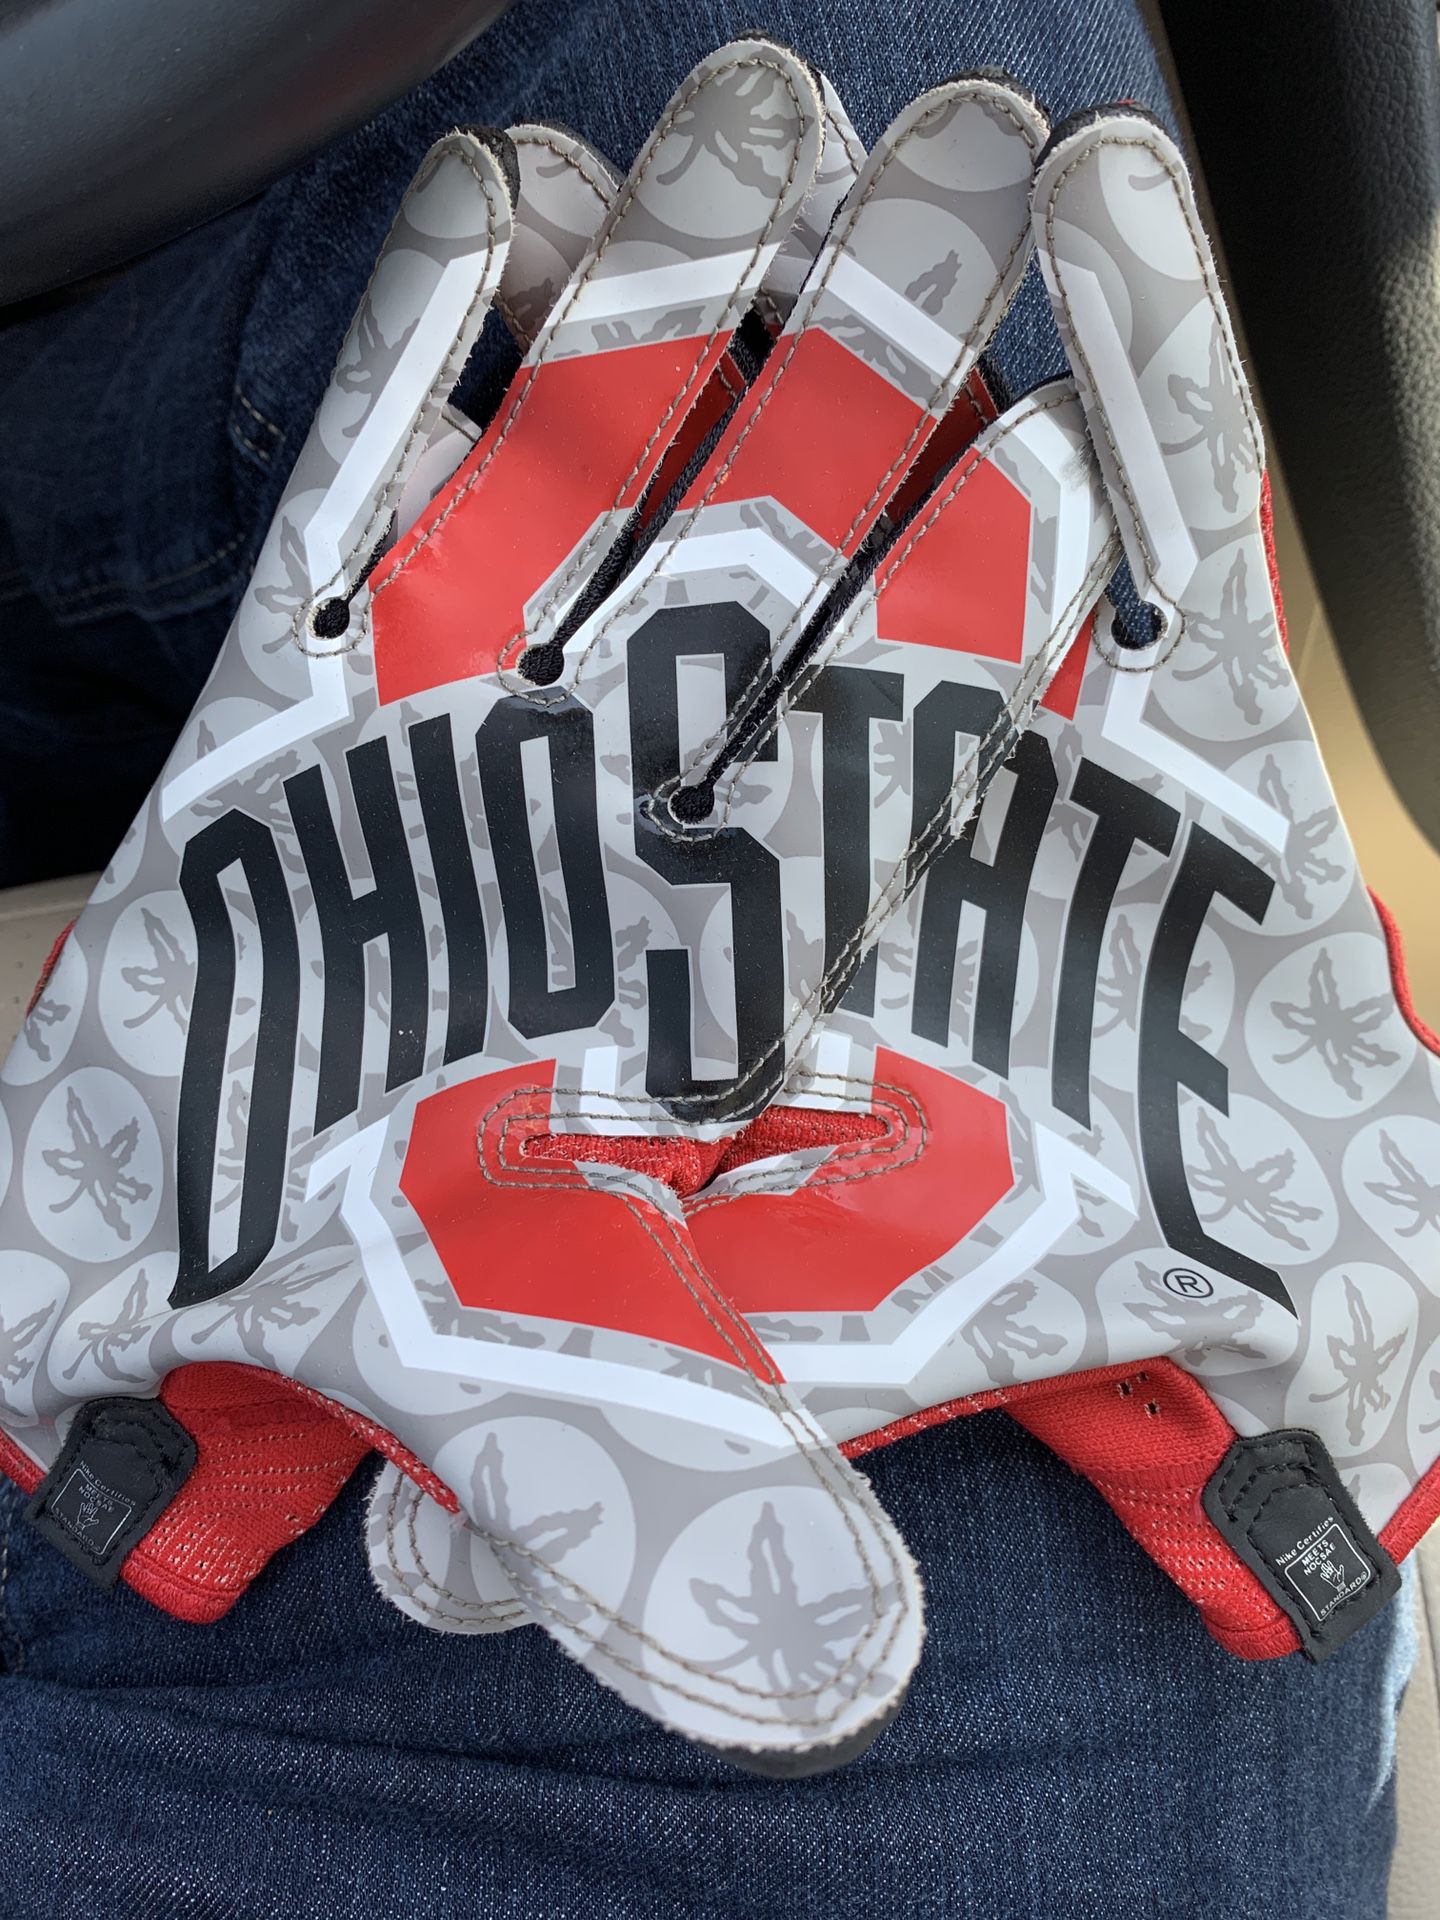 Ohio state football gloves